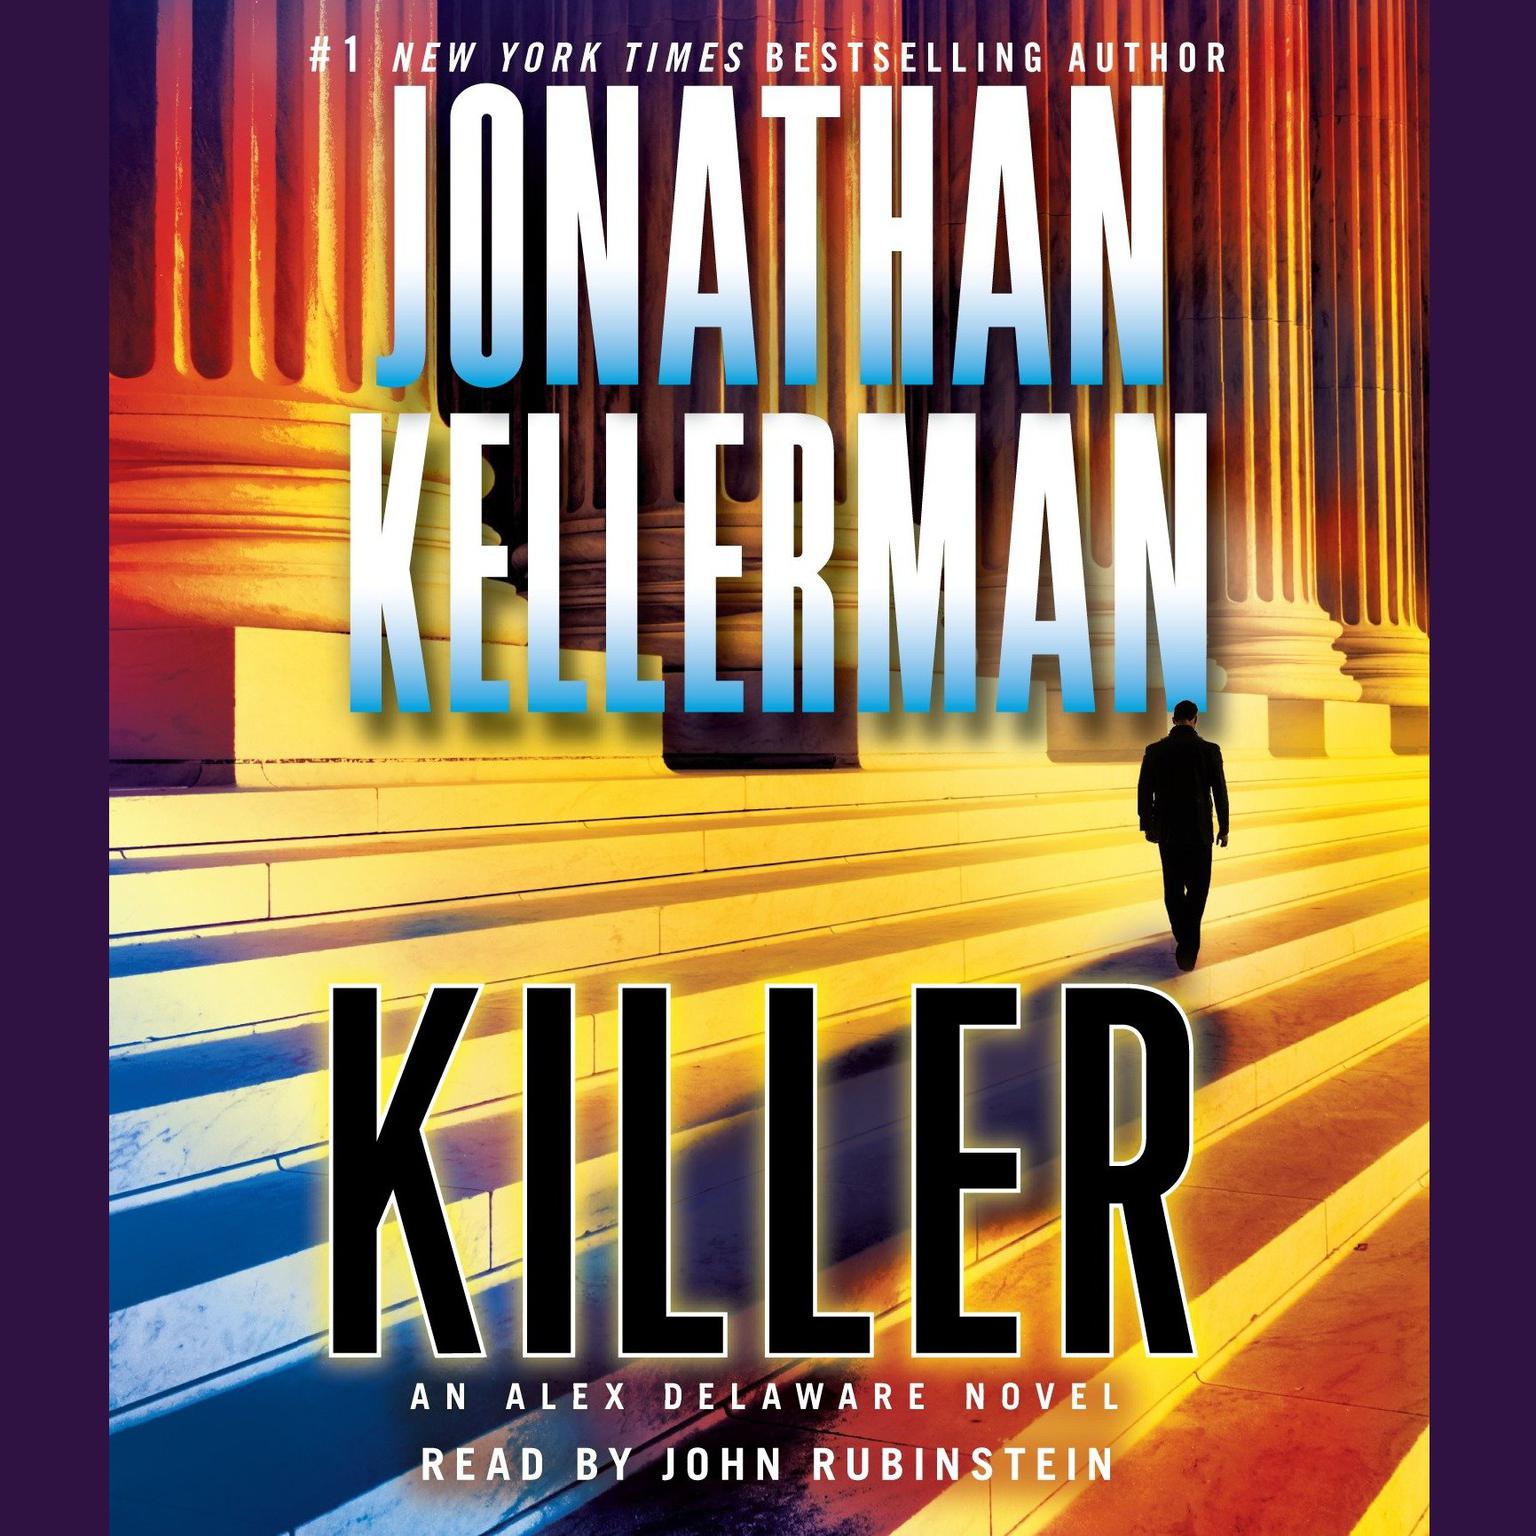 Killer (Abridged): An Alex Delaware Novel Audiobook, by Jonathan Kellerman